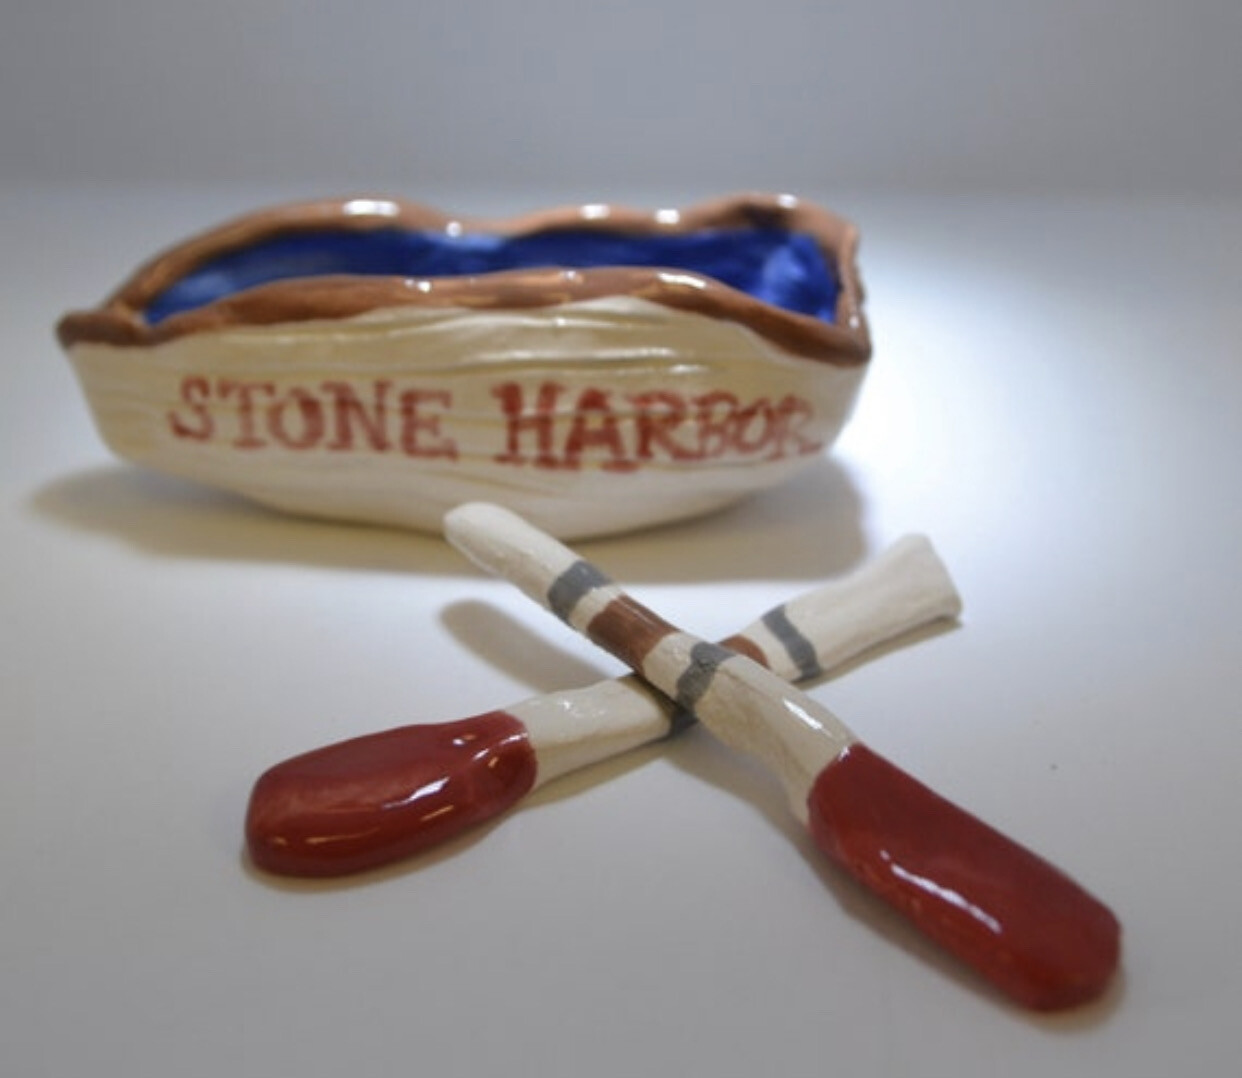 Handmade Stone Harbor NJ Pottery - Miniature Clay Lifeguard Boat Sculpture for Desk or Bookshelf - Handmade Ceramic Stone Harbor Souvenir